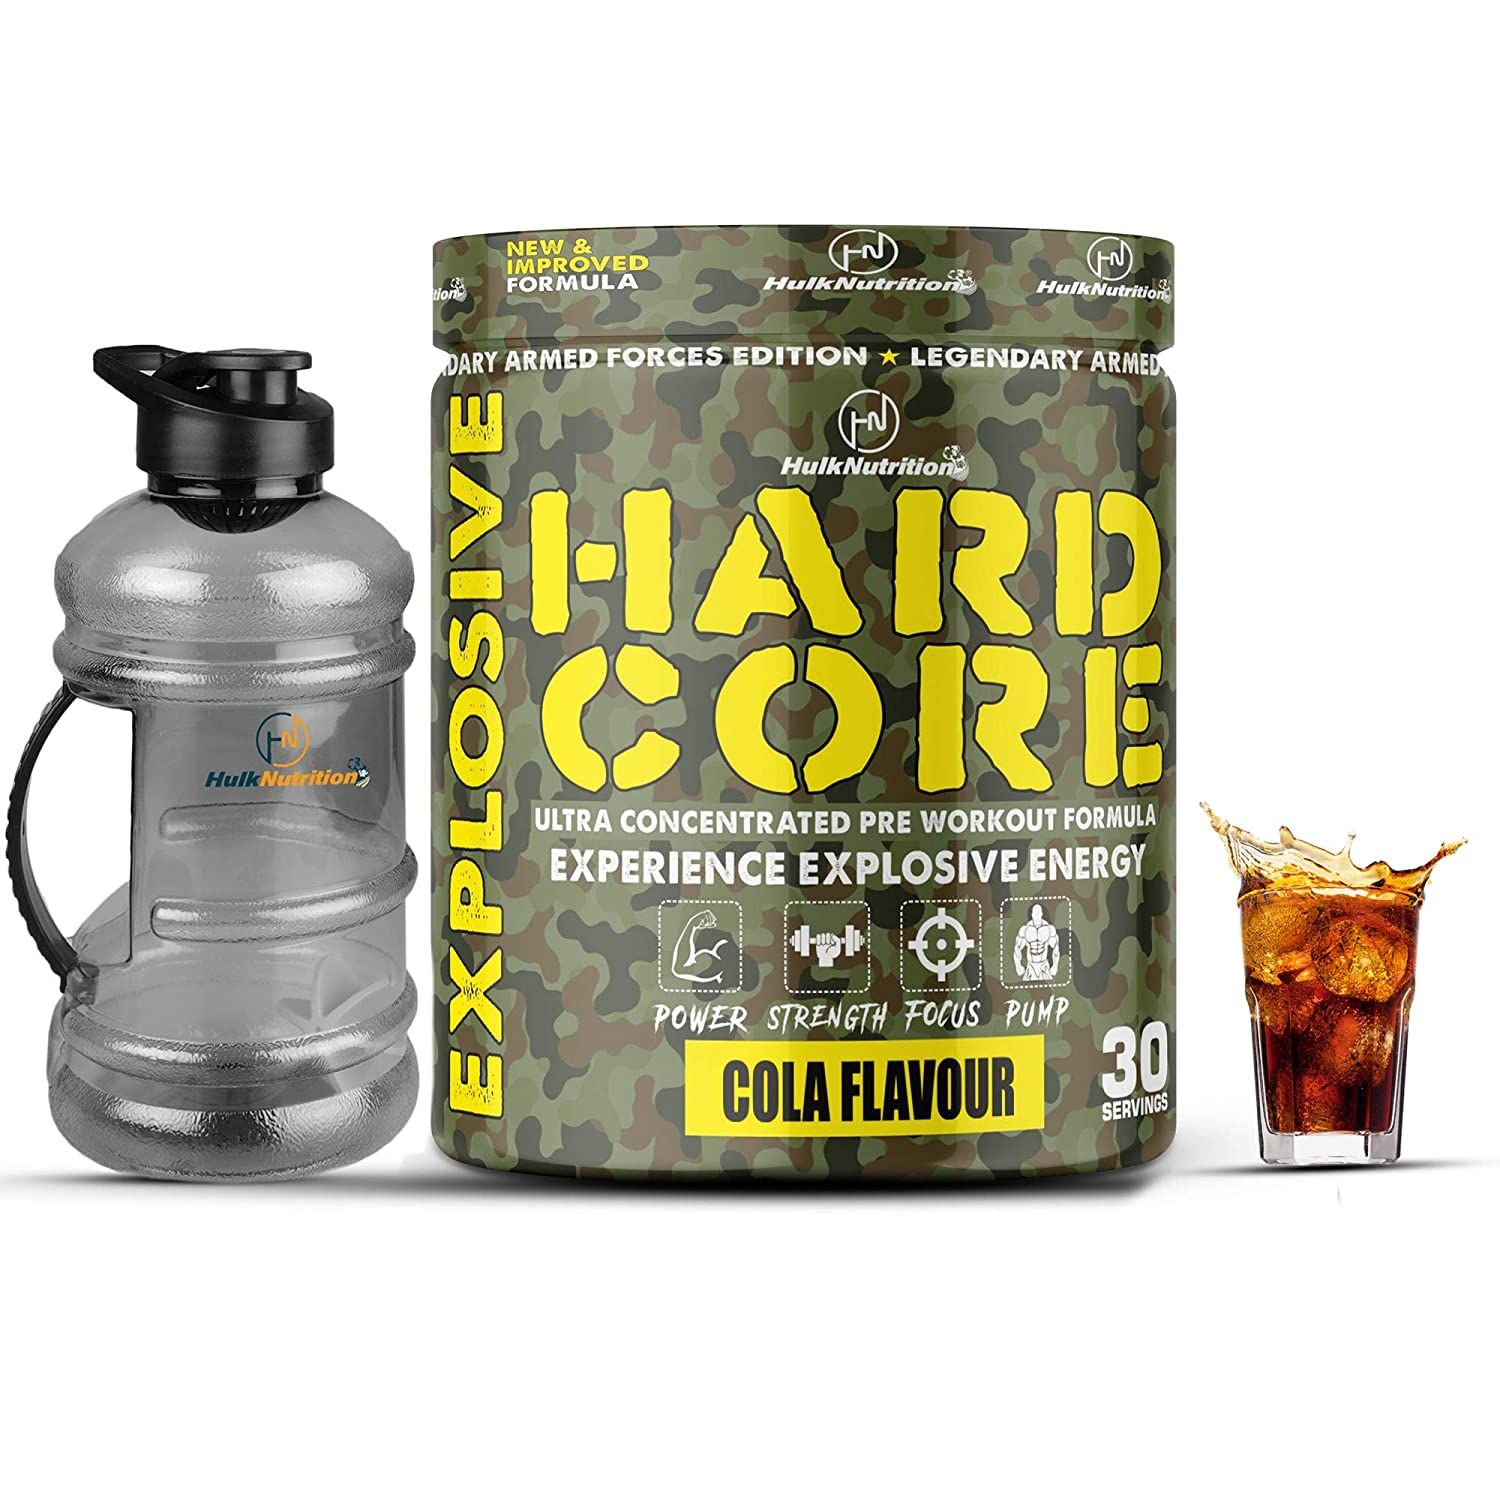 Hulk Nutrition Hardcore Pre Workout Supplement Energy Drink Cola Flavour Image